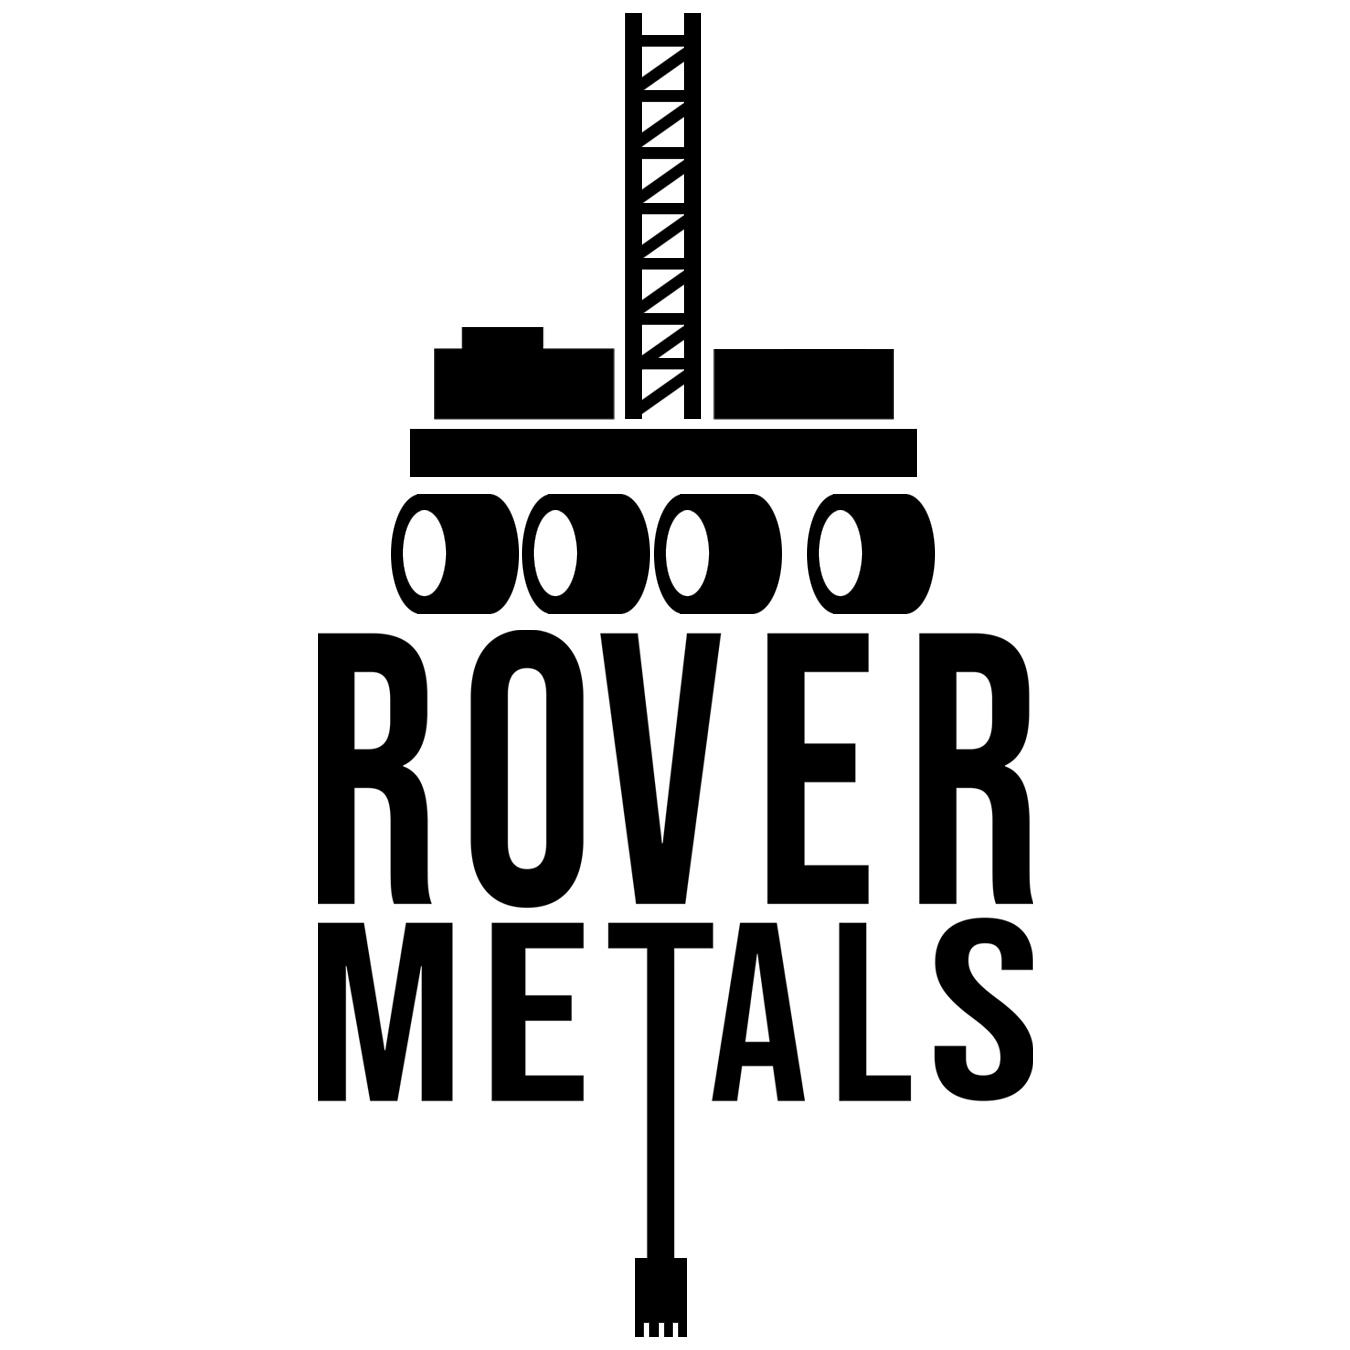 ROVR Logo 4.0 (Black).png